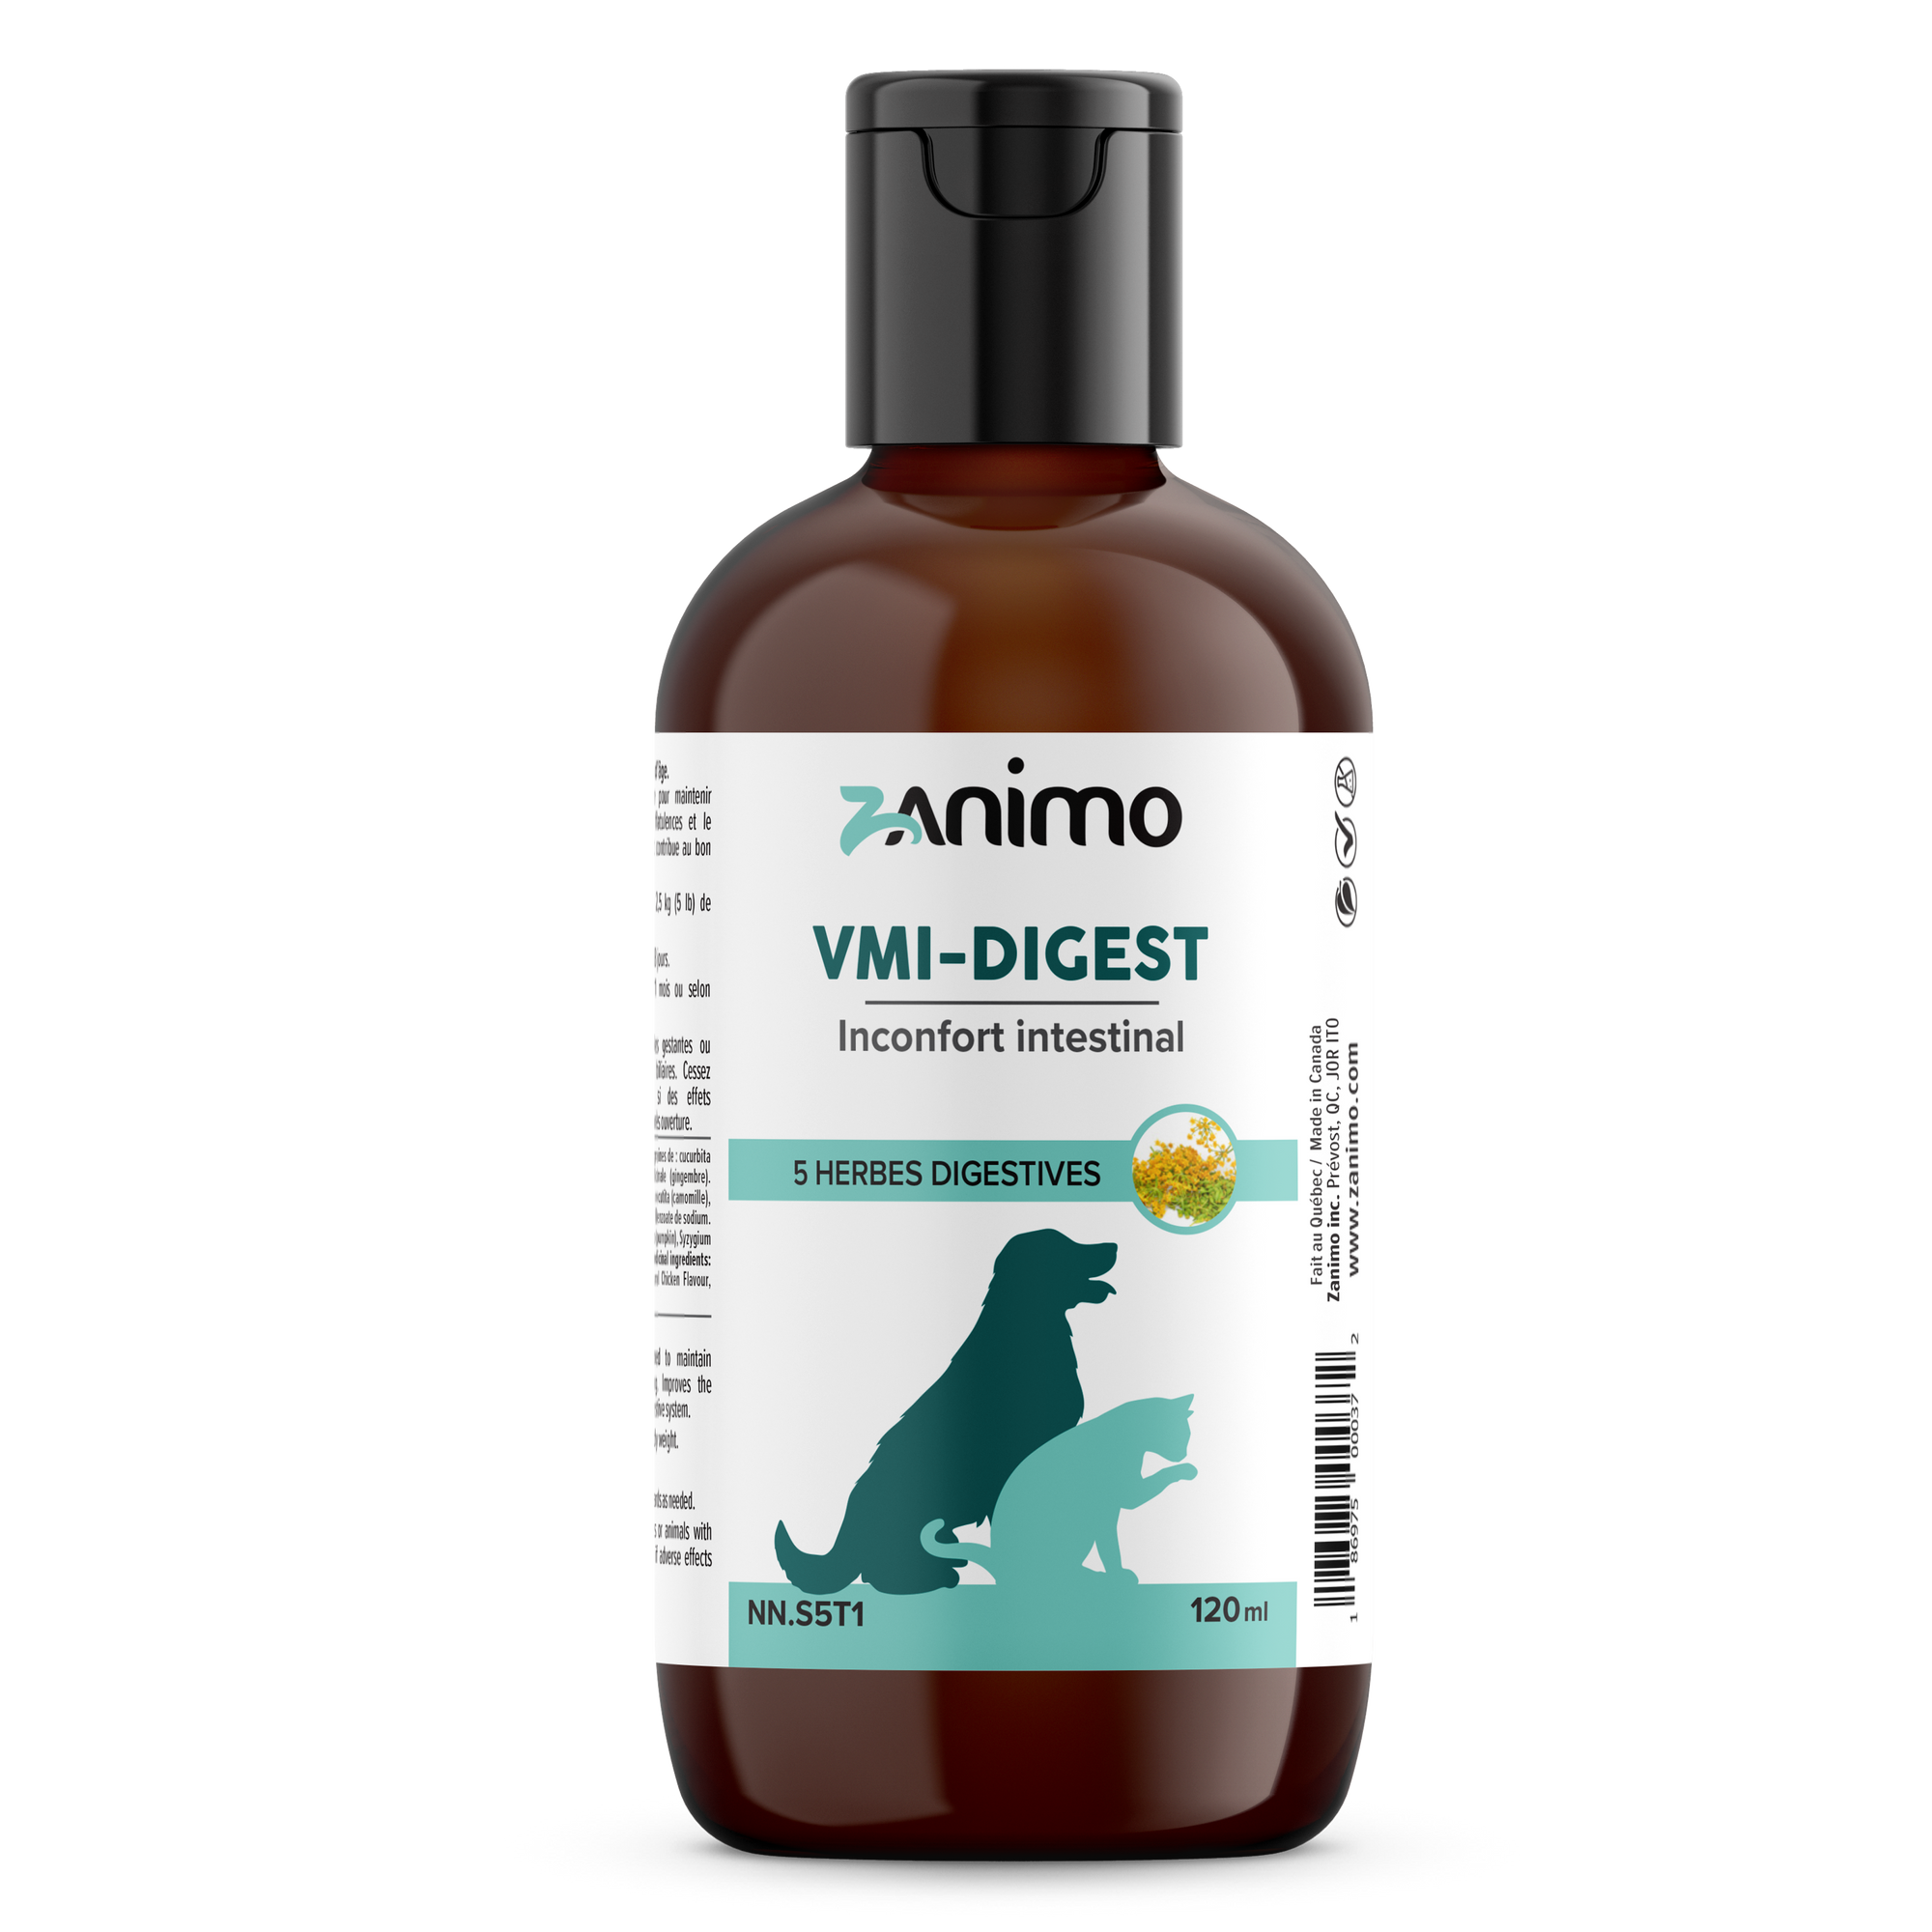 Zanimo VMI-DIGEST intestinal discomfort 120 ml